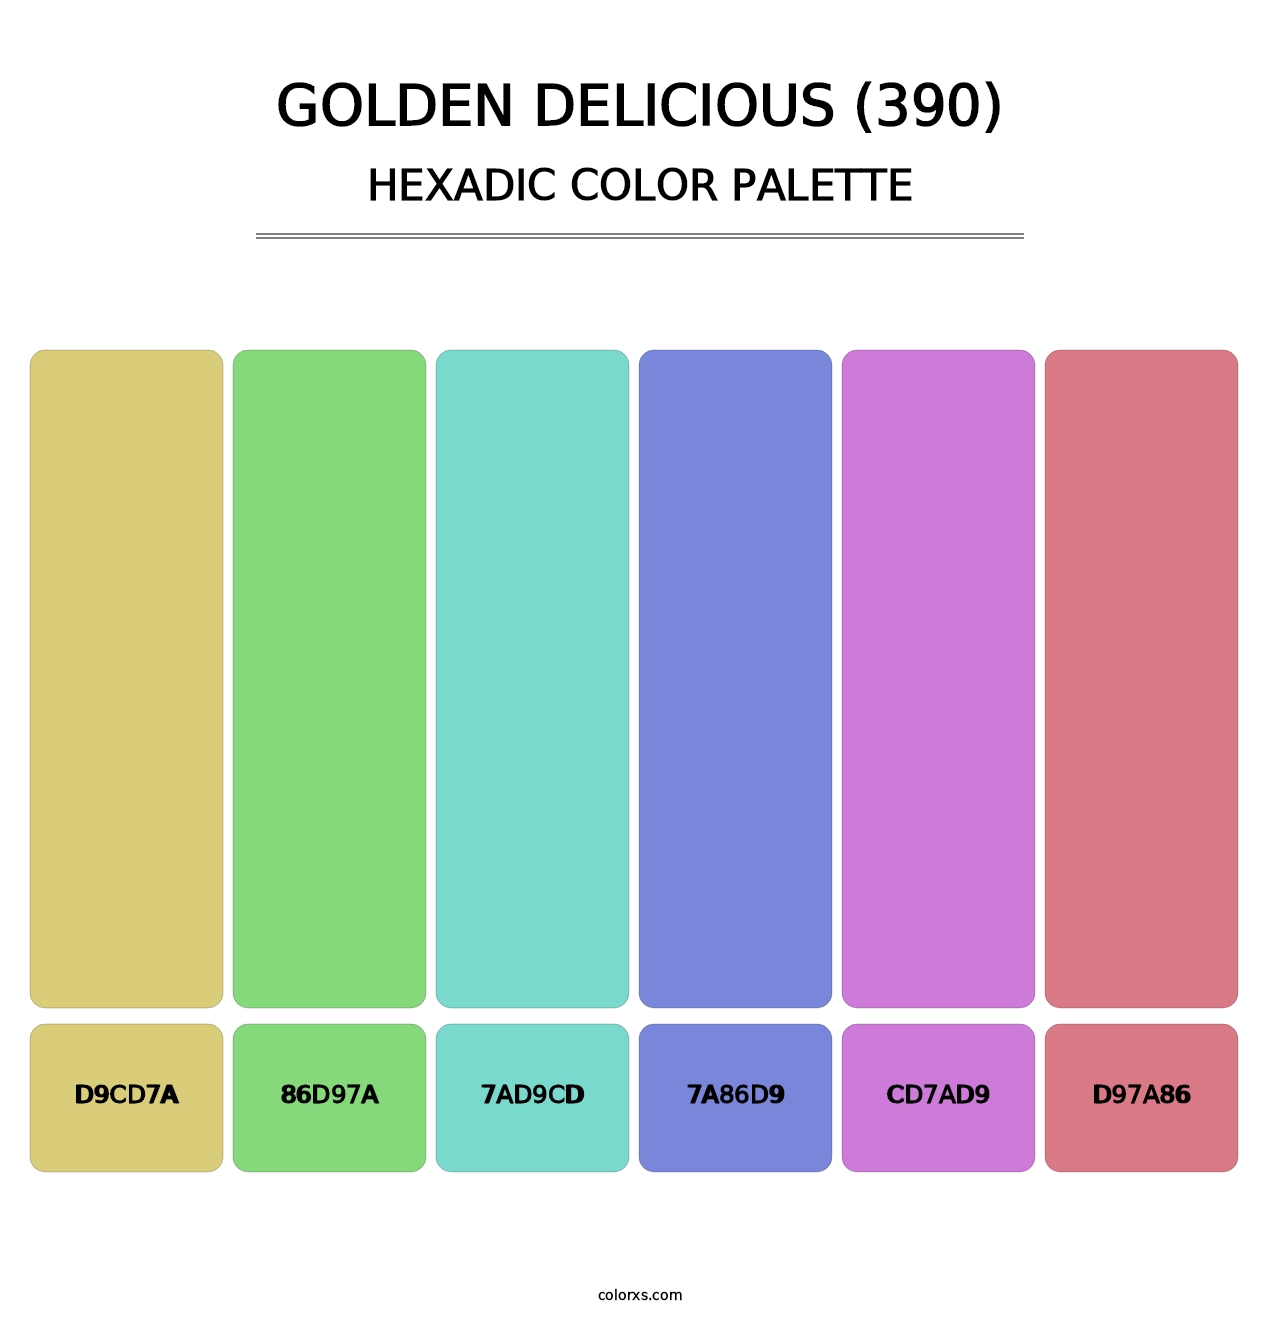 Golden Delicious (390) - Hexadic Color Palette